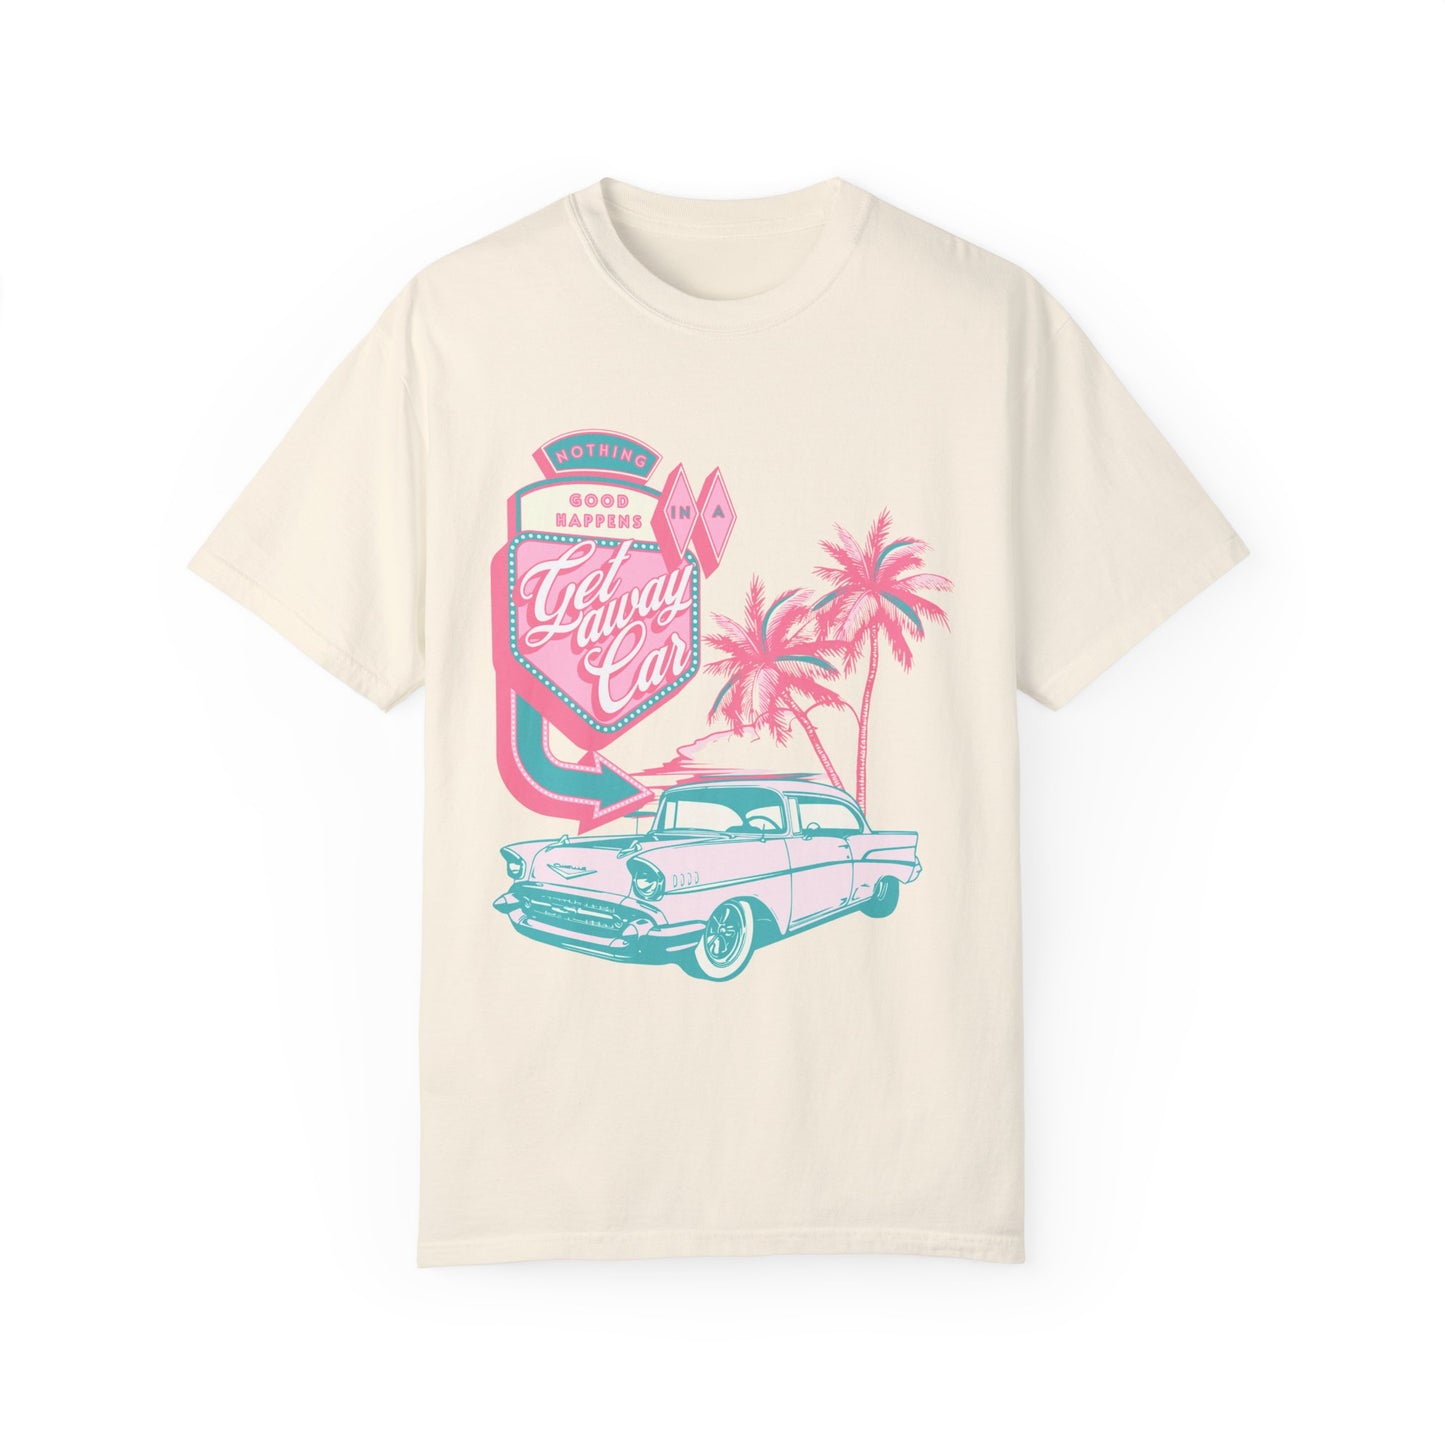 Getaway Car - T-shirt